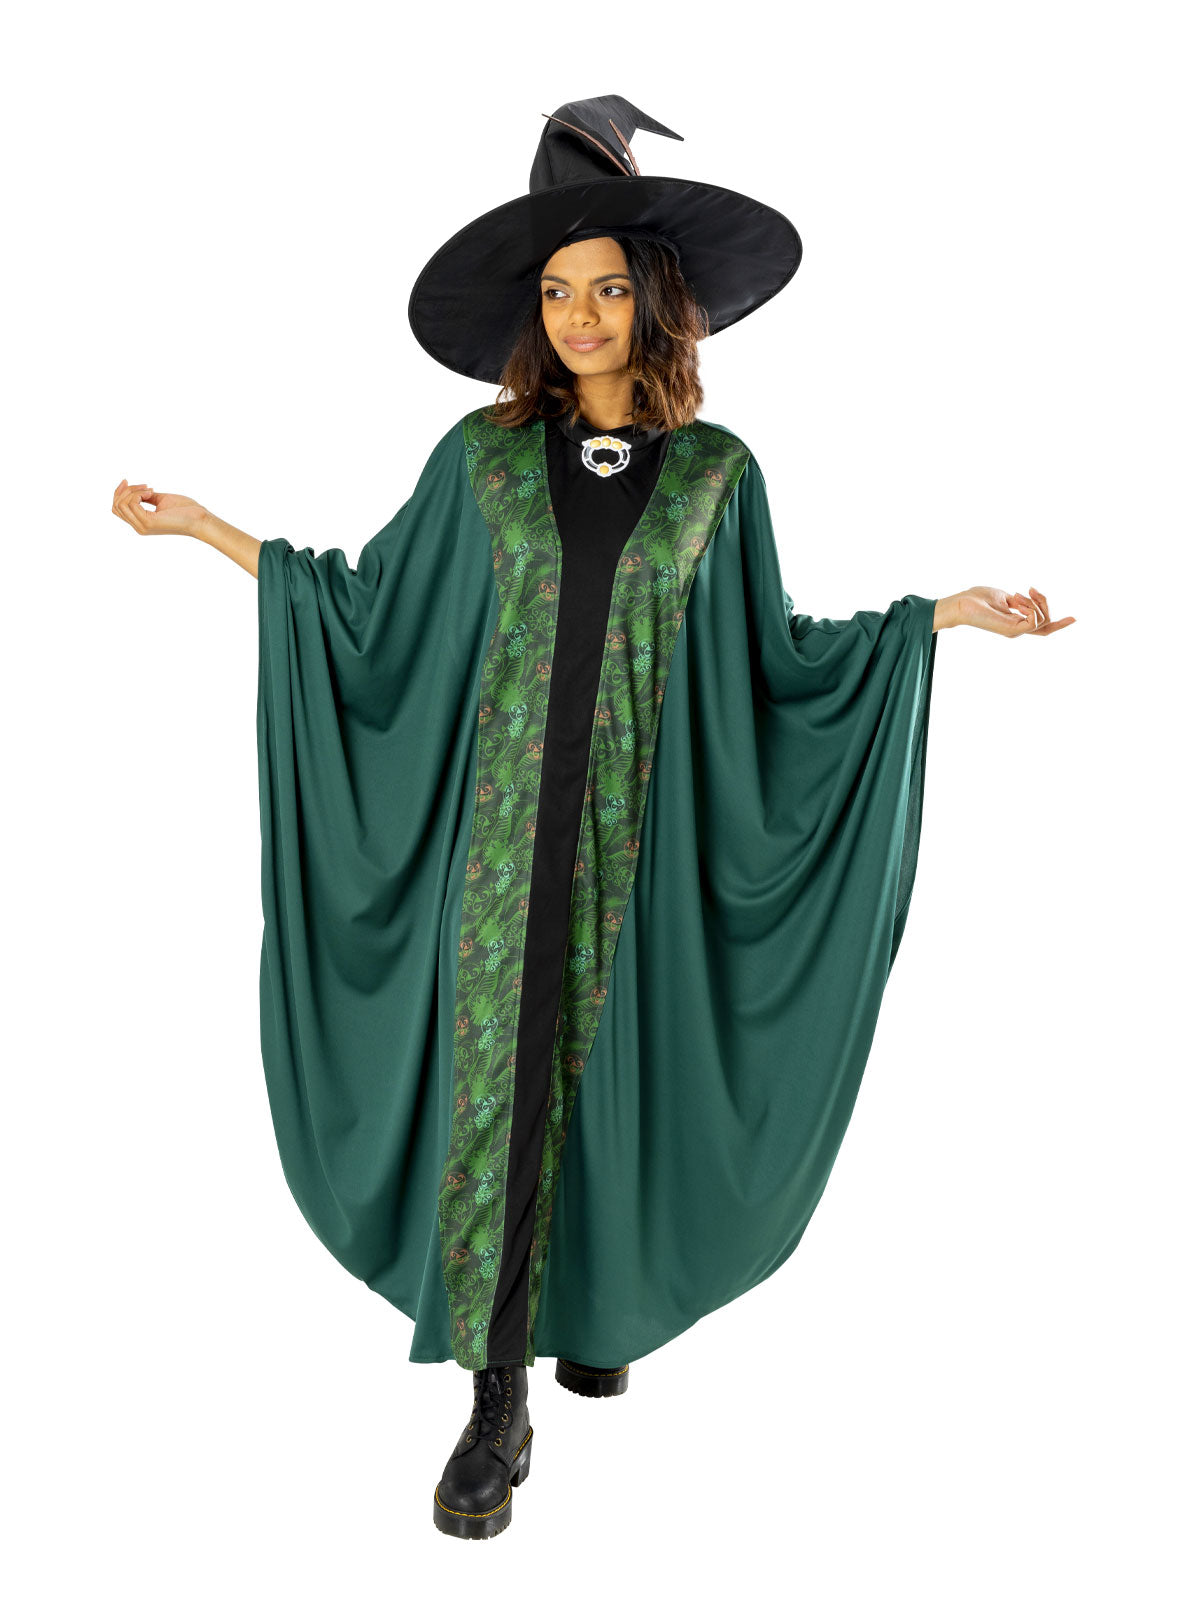 Professor McGonagall Robe for Adults - Warner Bros Harry Potter